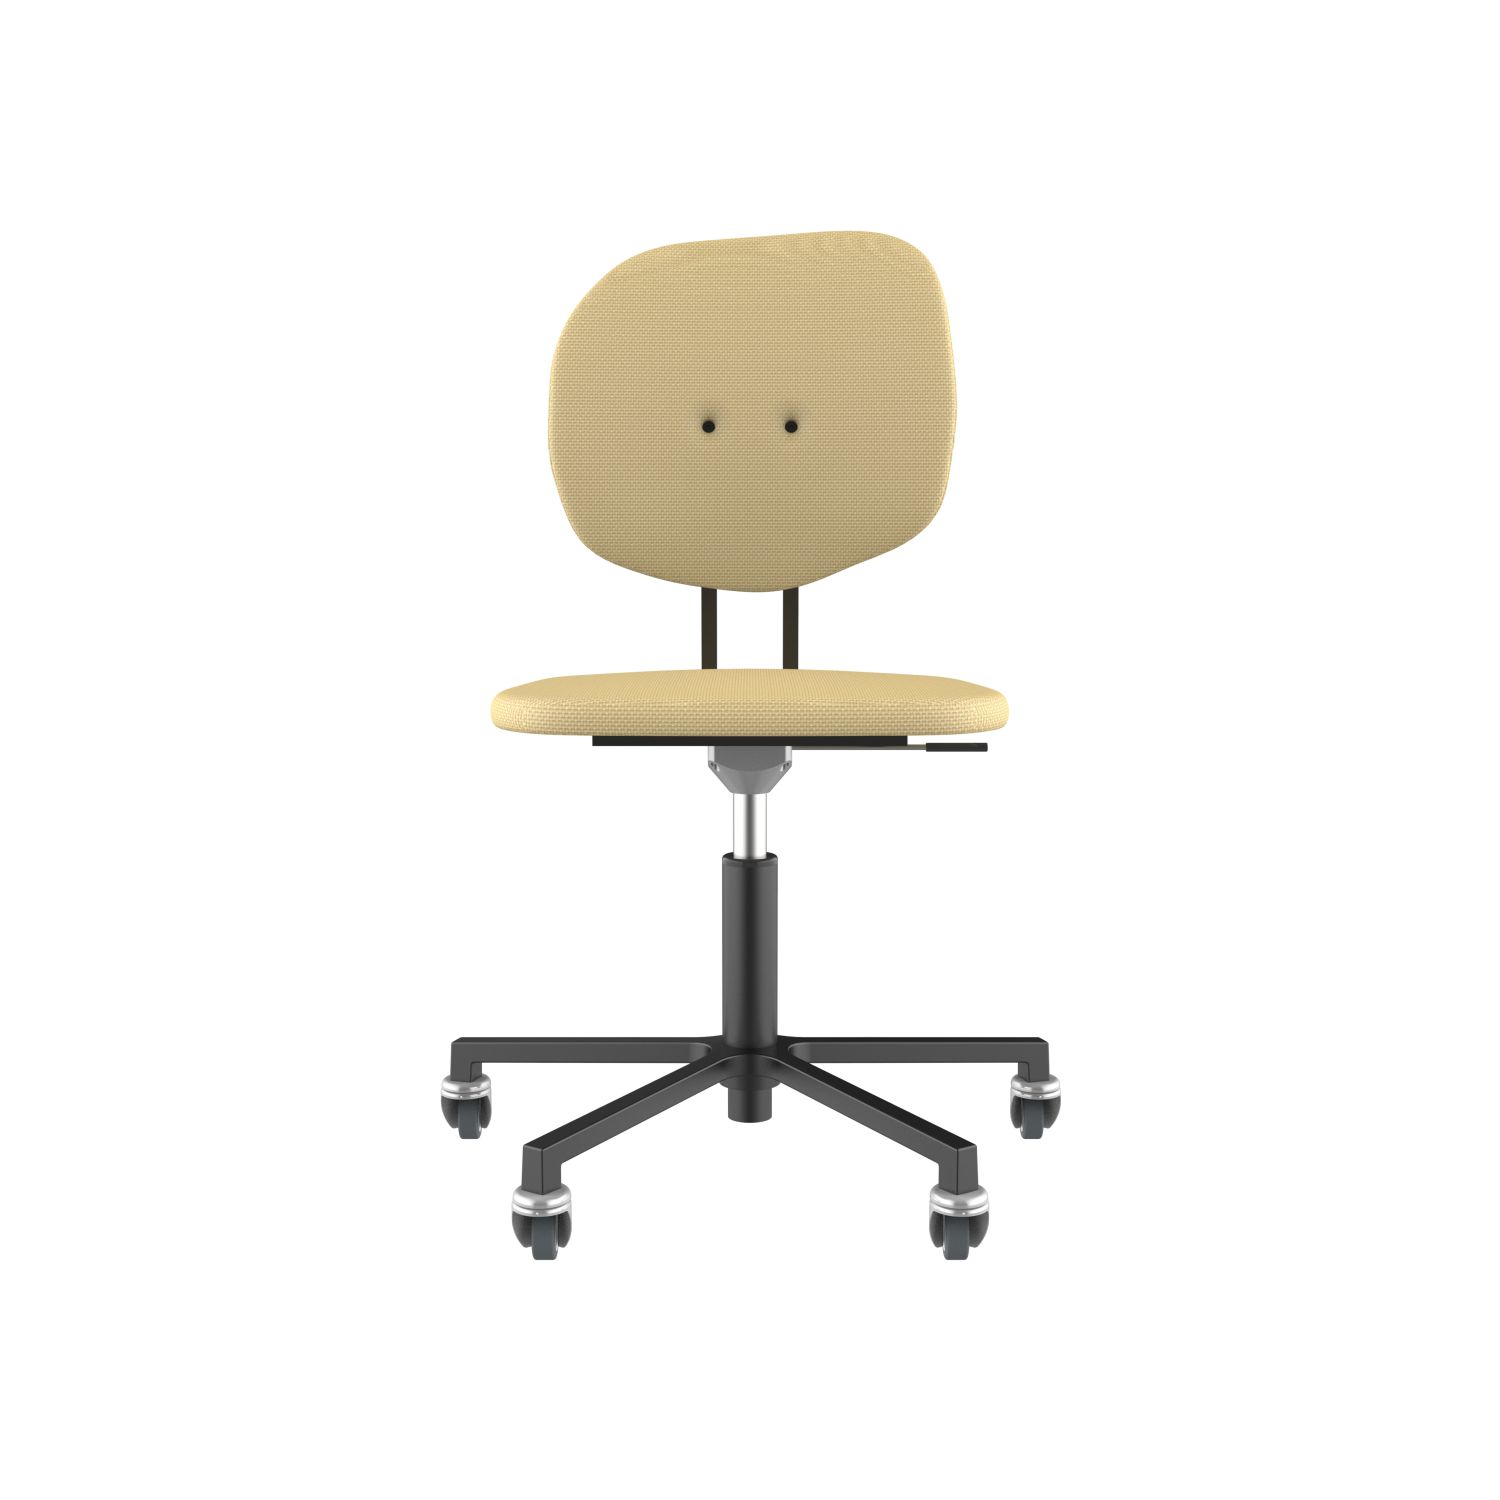 lensvelt maarten baas office chair without armrests backrest h light brown 141 black ral9005 soft wheels